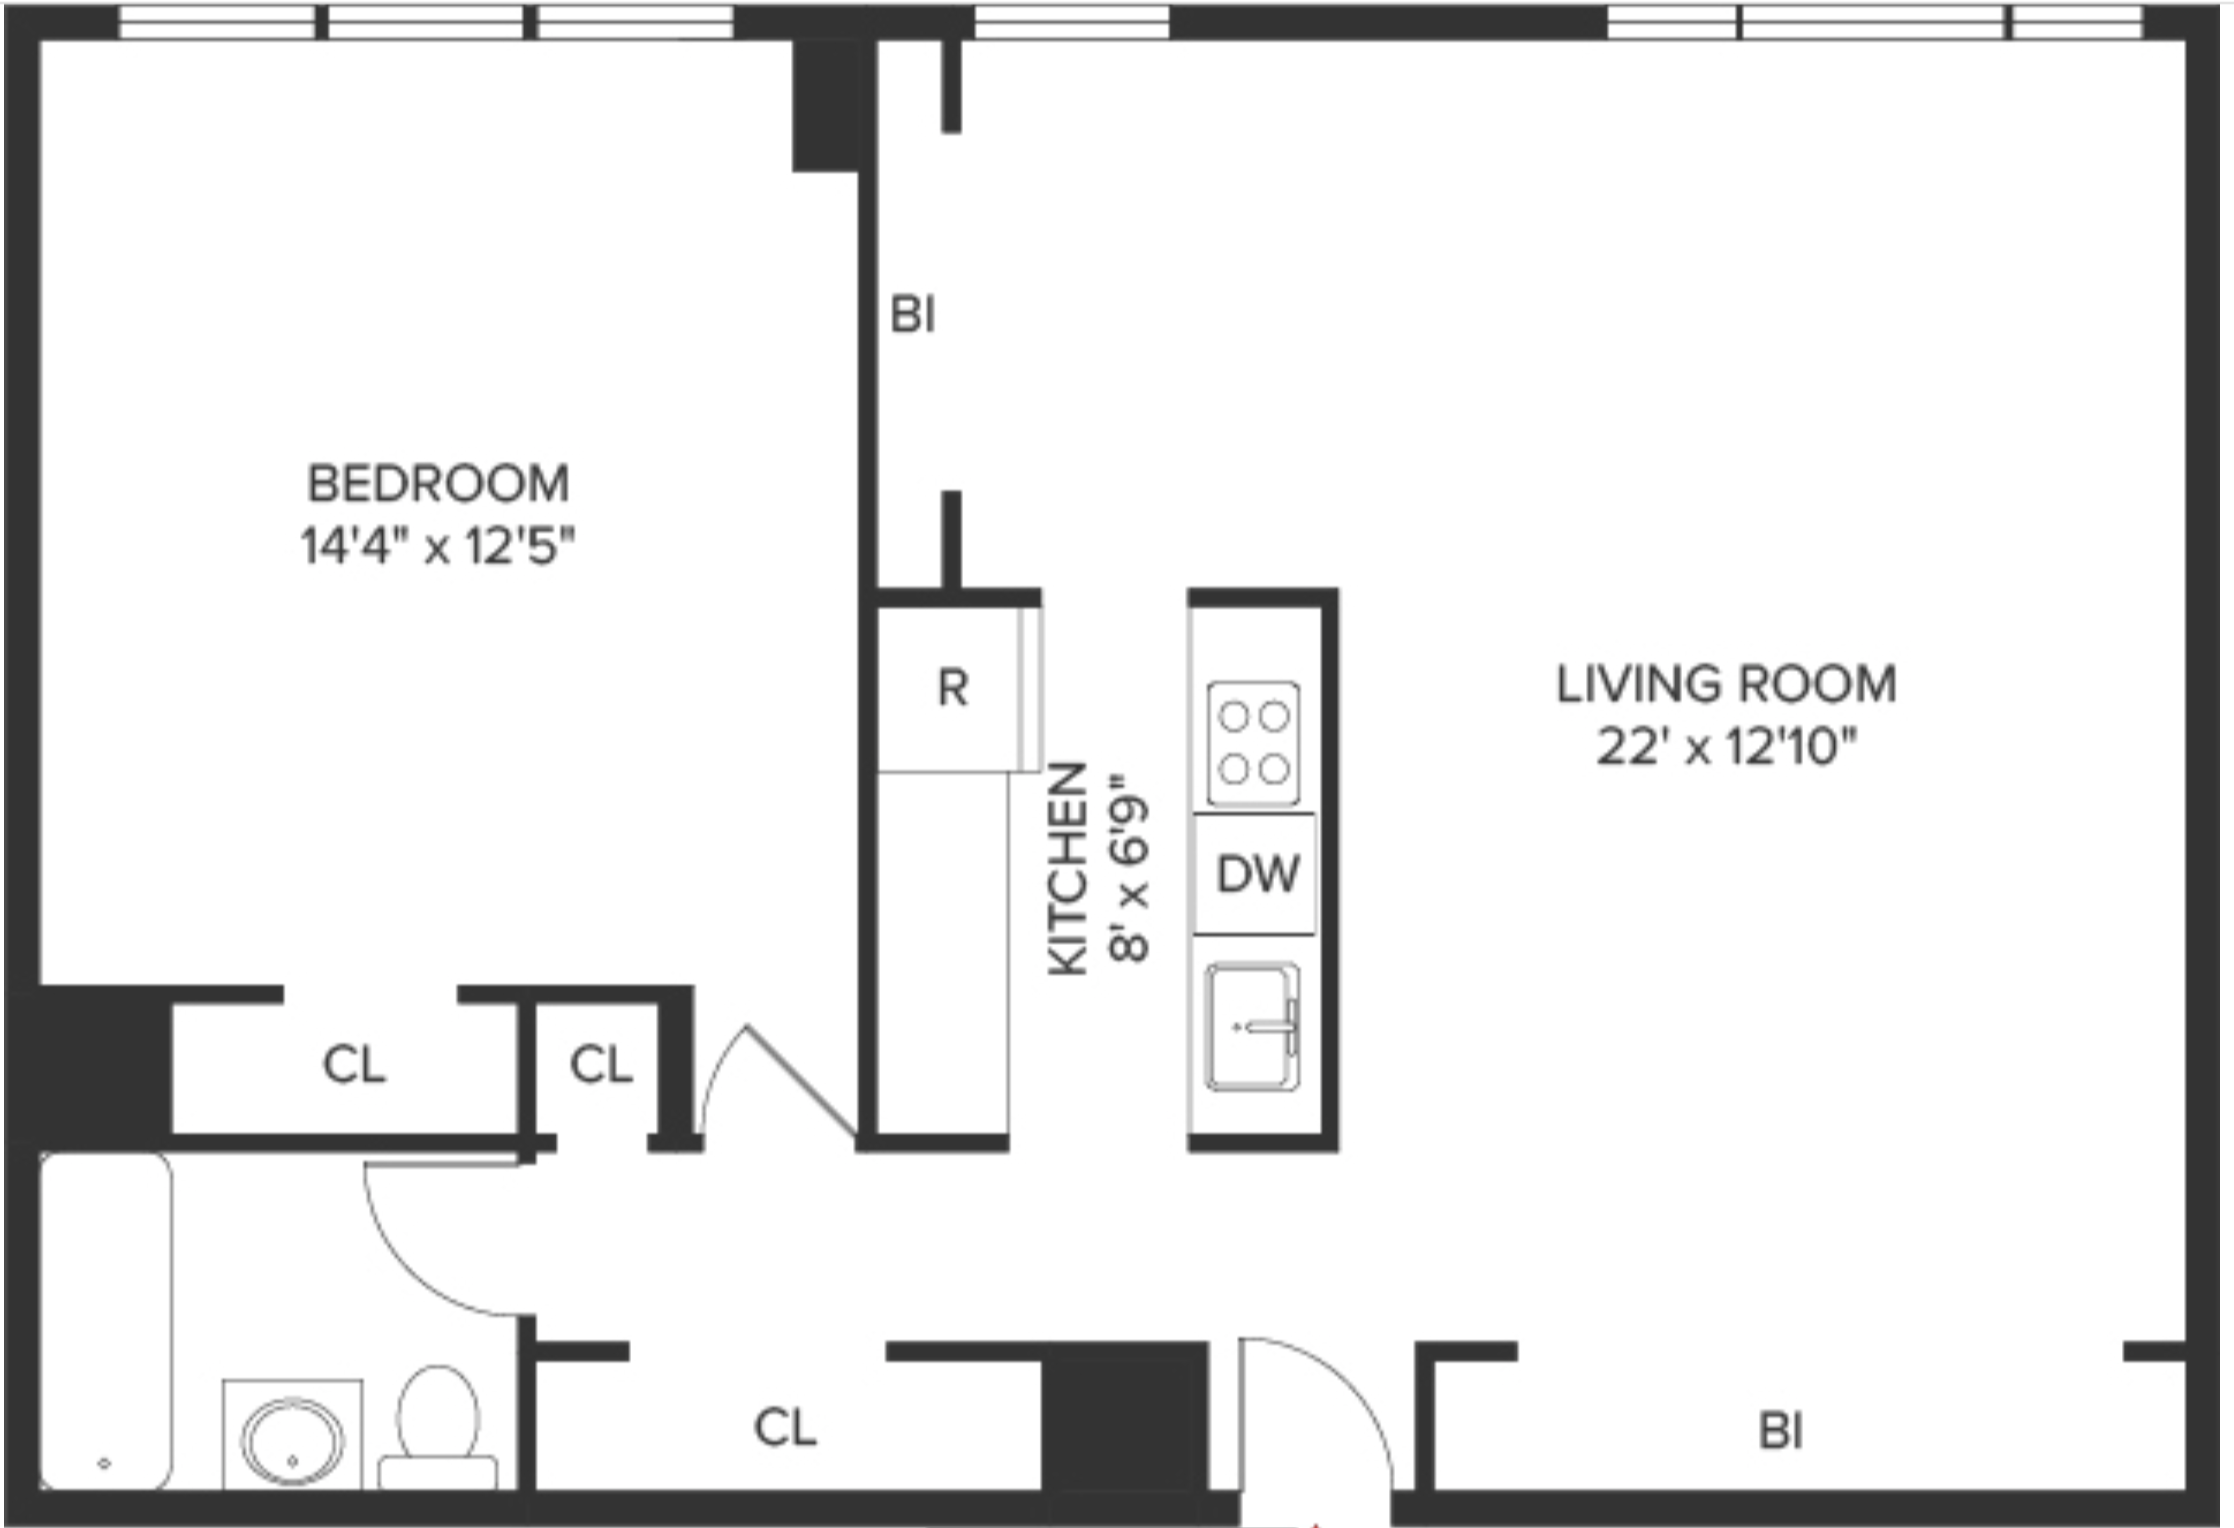 Floorplan for 32 Gramercy Park, 16C